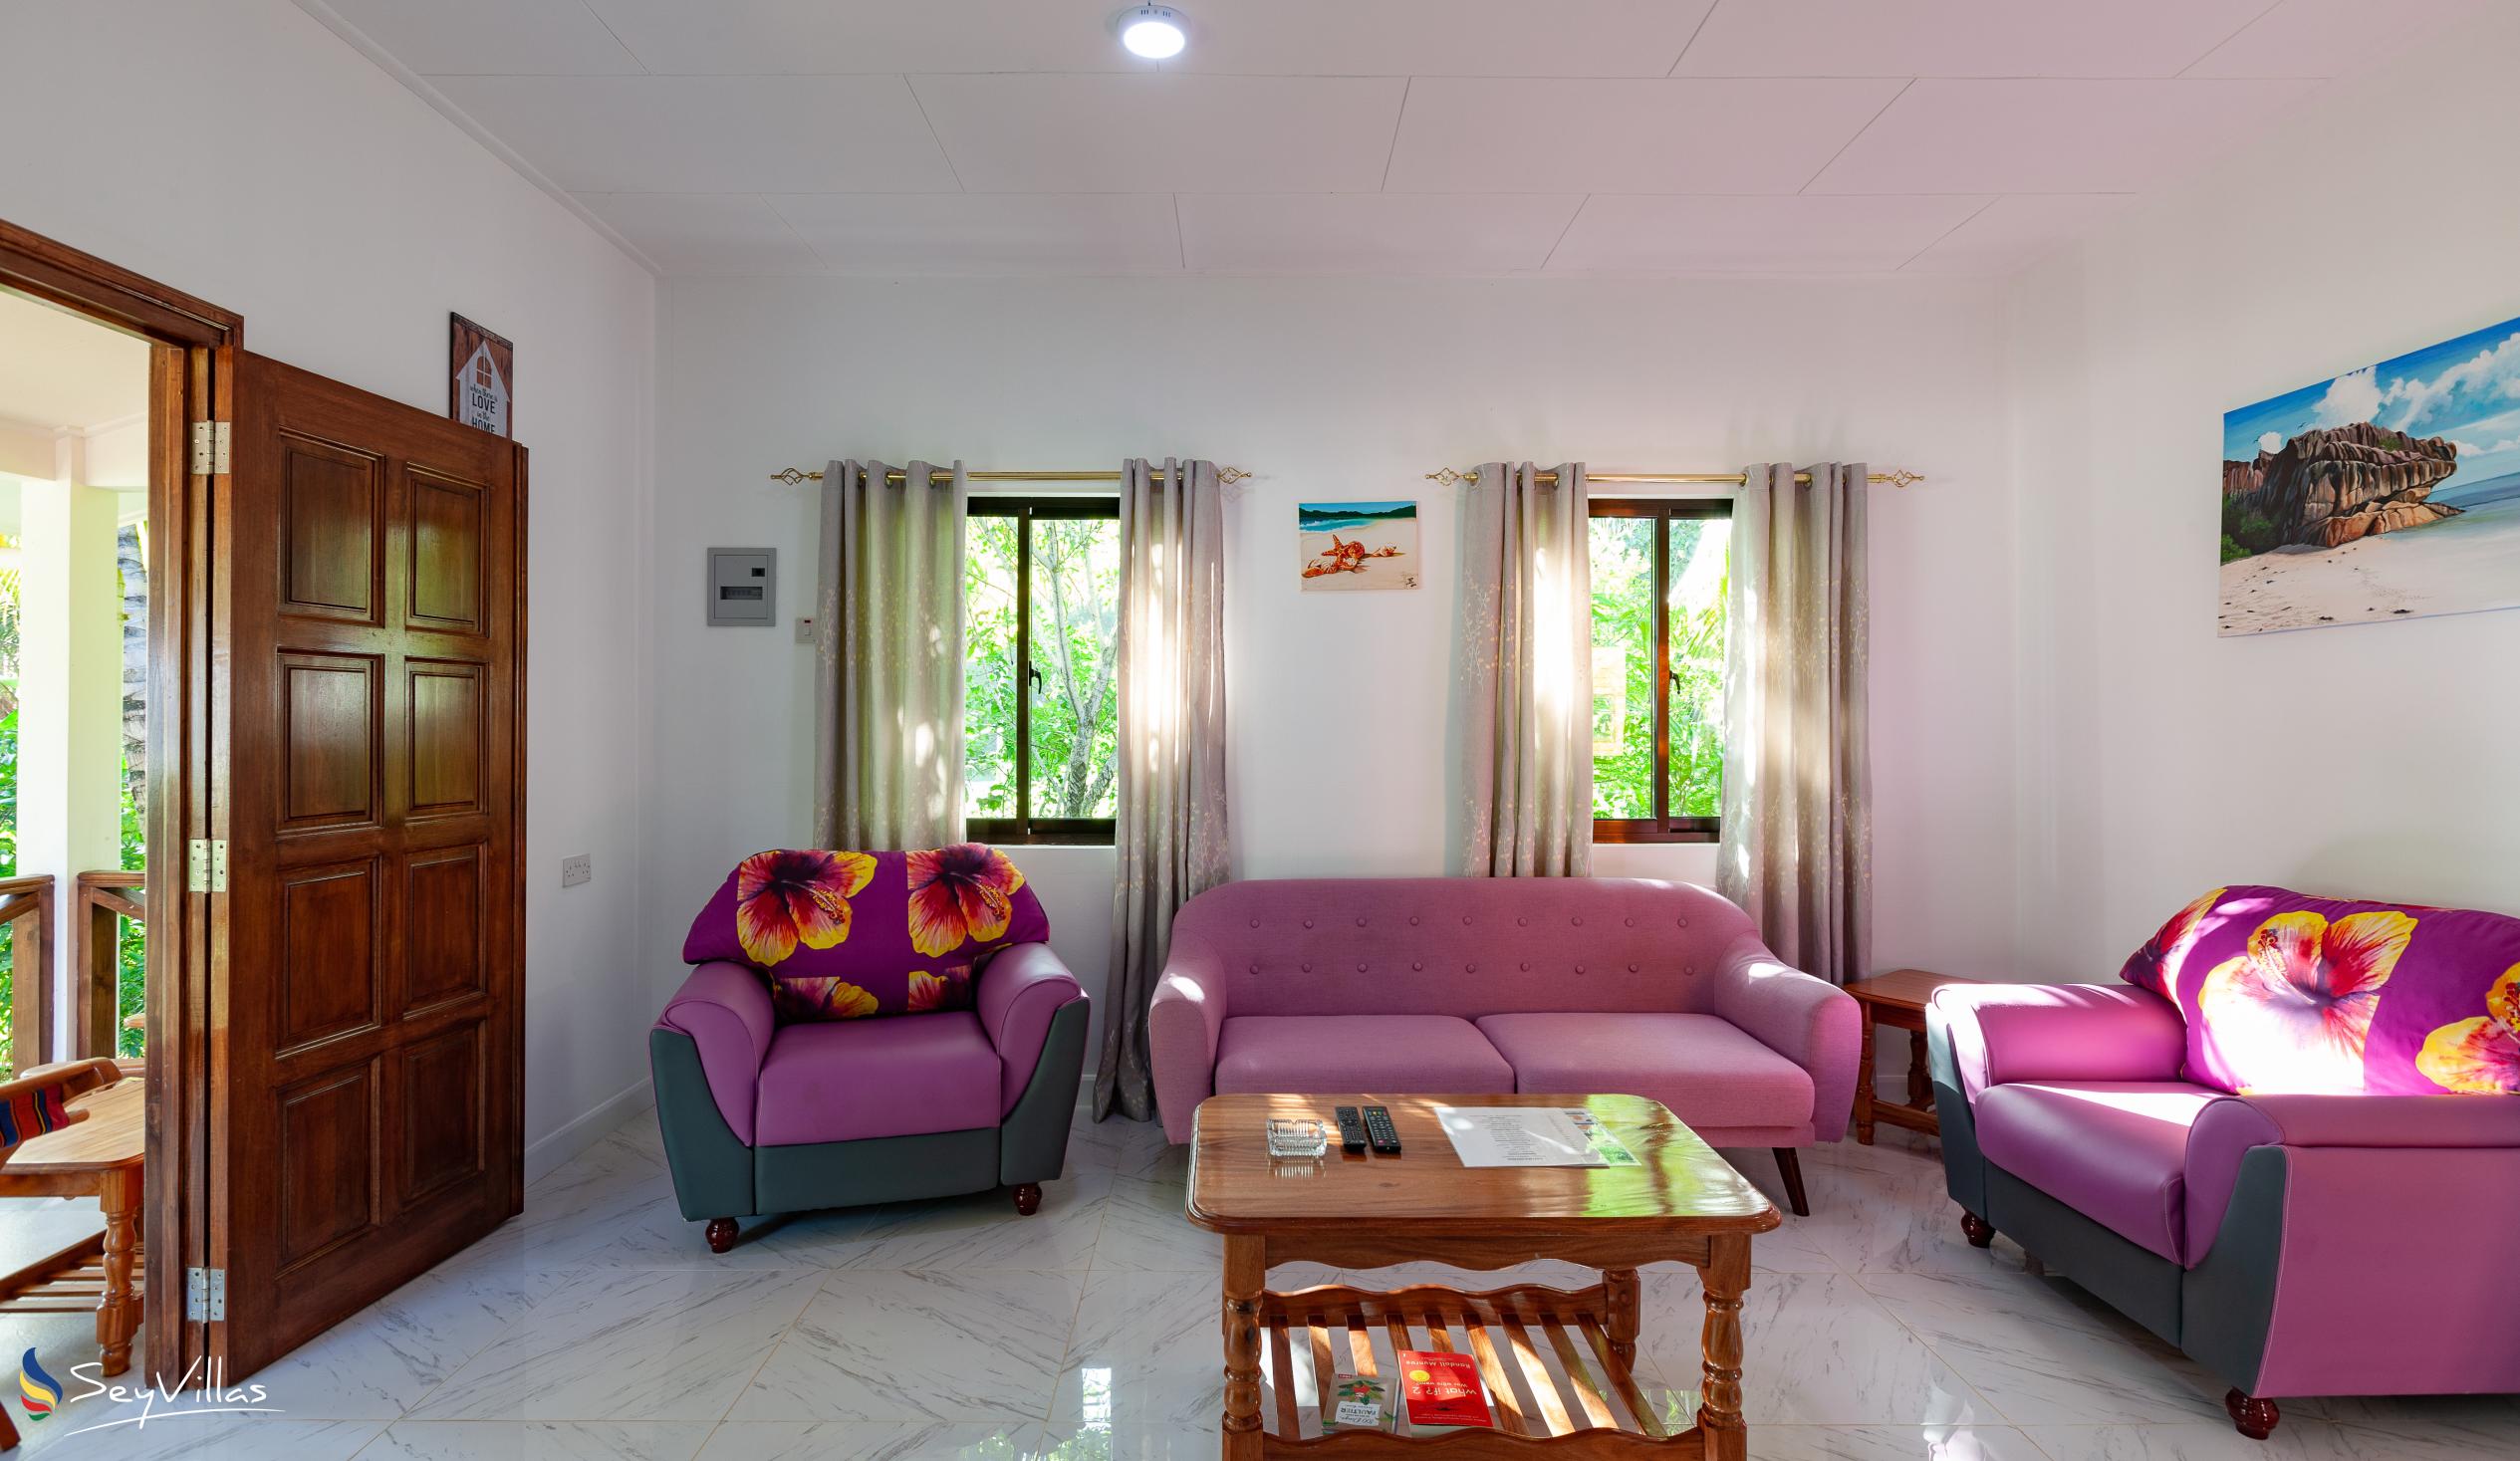 Foto 65: Anse Grosse Roche Beach Villa - Appartement 1 chambre - La Digue (Seychelles)